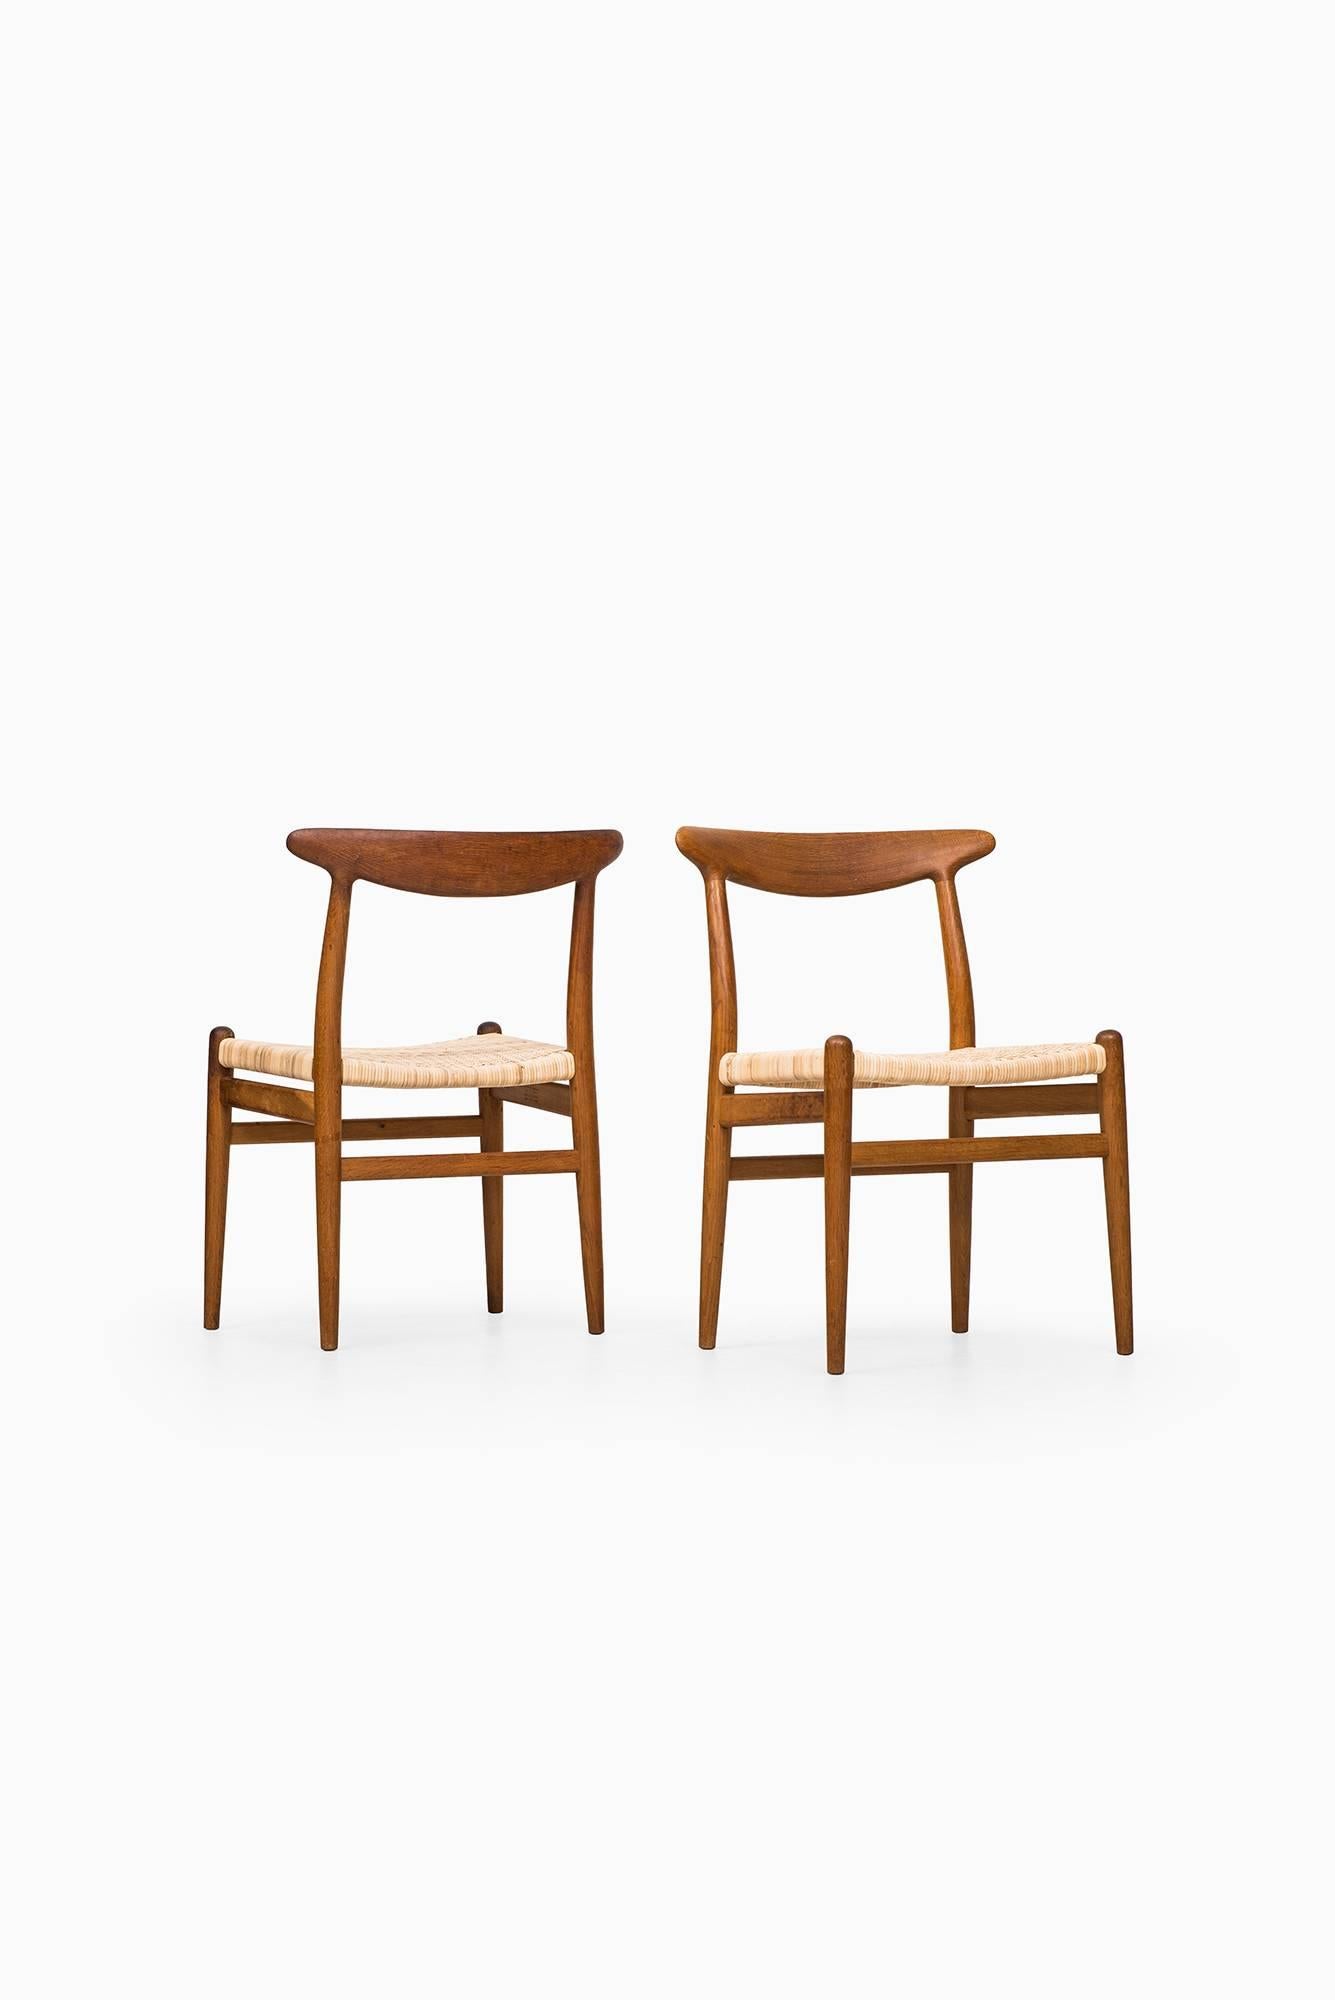 Hans Wegner Dining Chairs Model W2 by C.M Madsen in Denmark In Excellent Condition In Limhamn, Skåne län